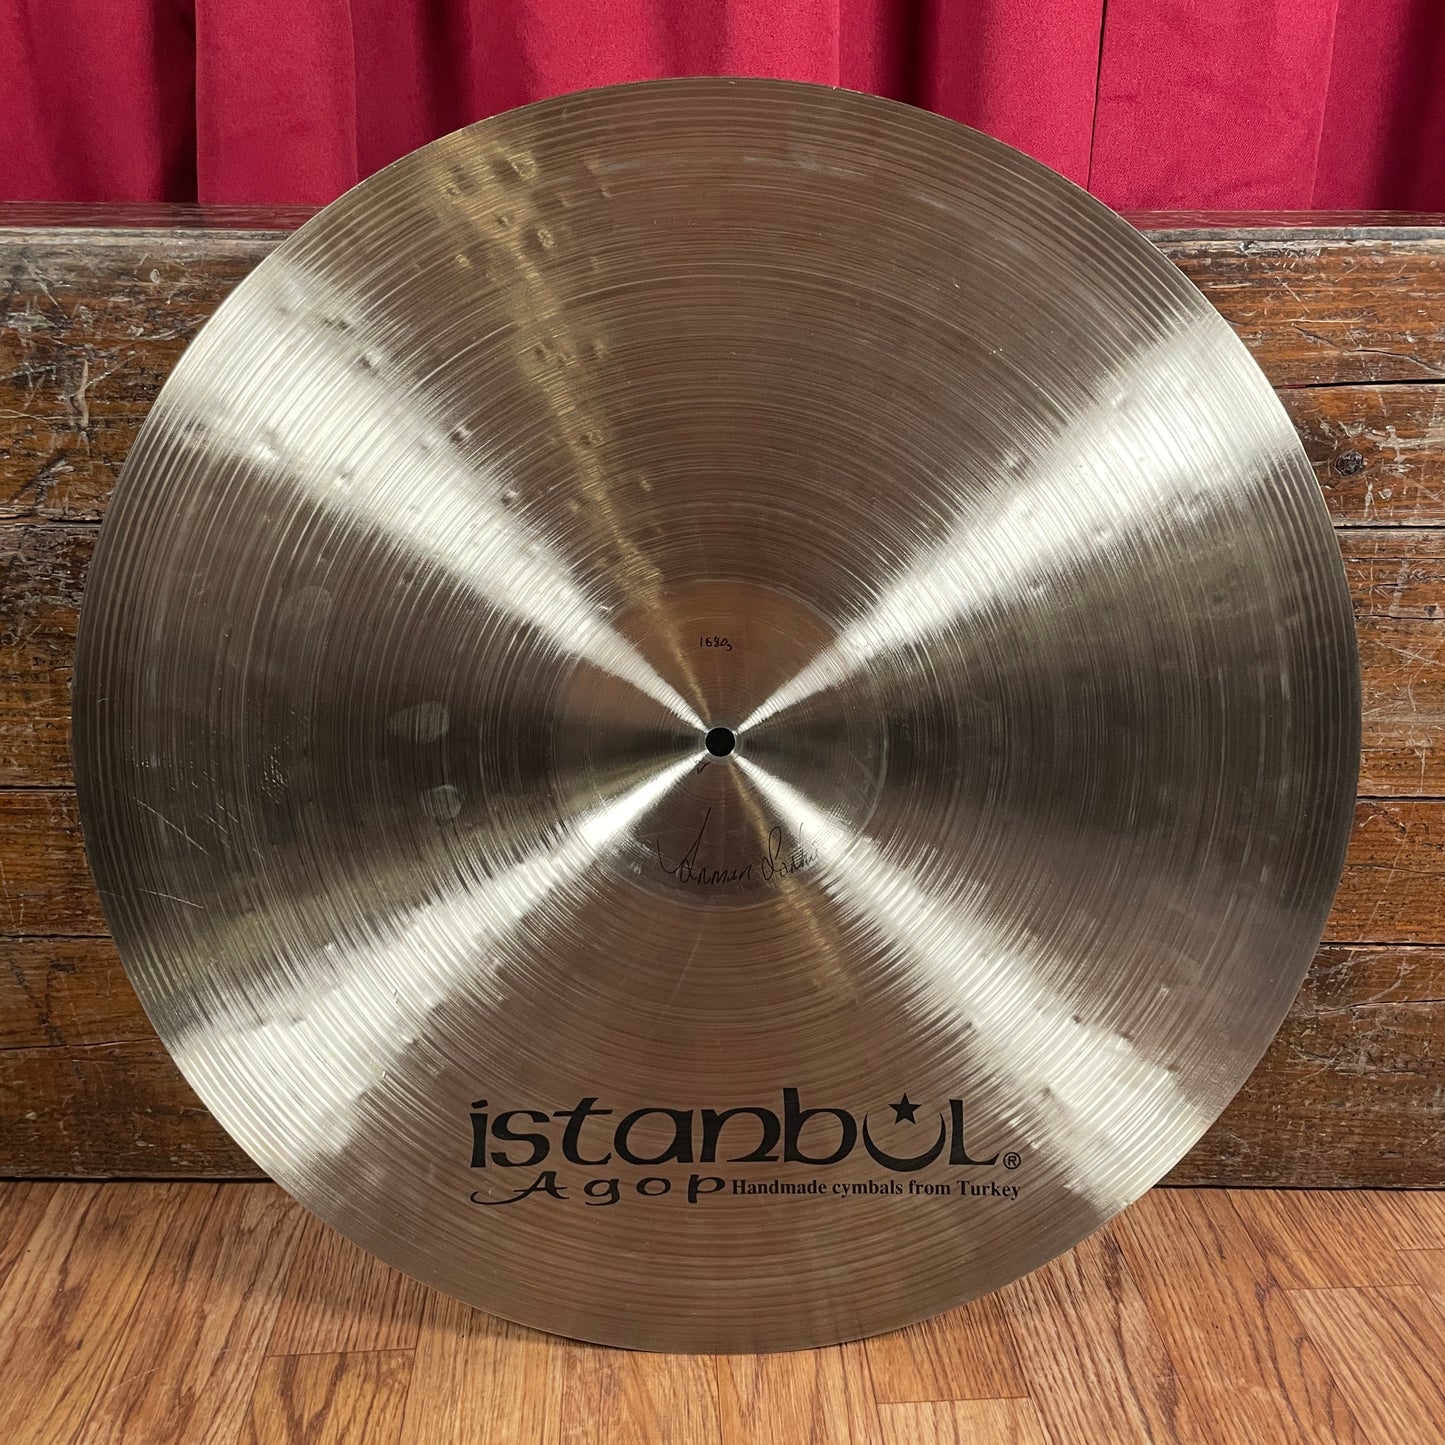 20" Istanbul Agop Traditional Dark Crash Cymbal 1680g *Video Demo*